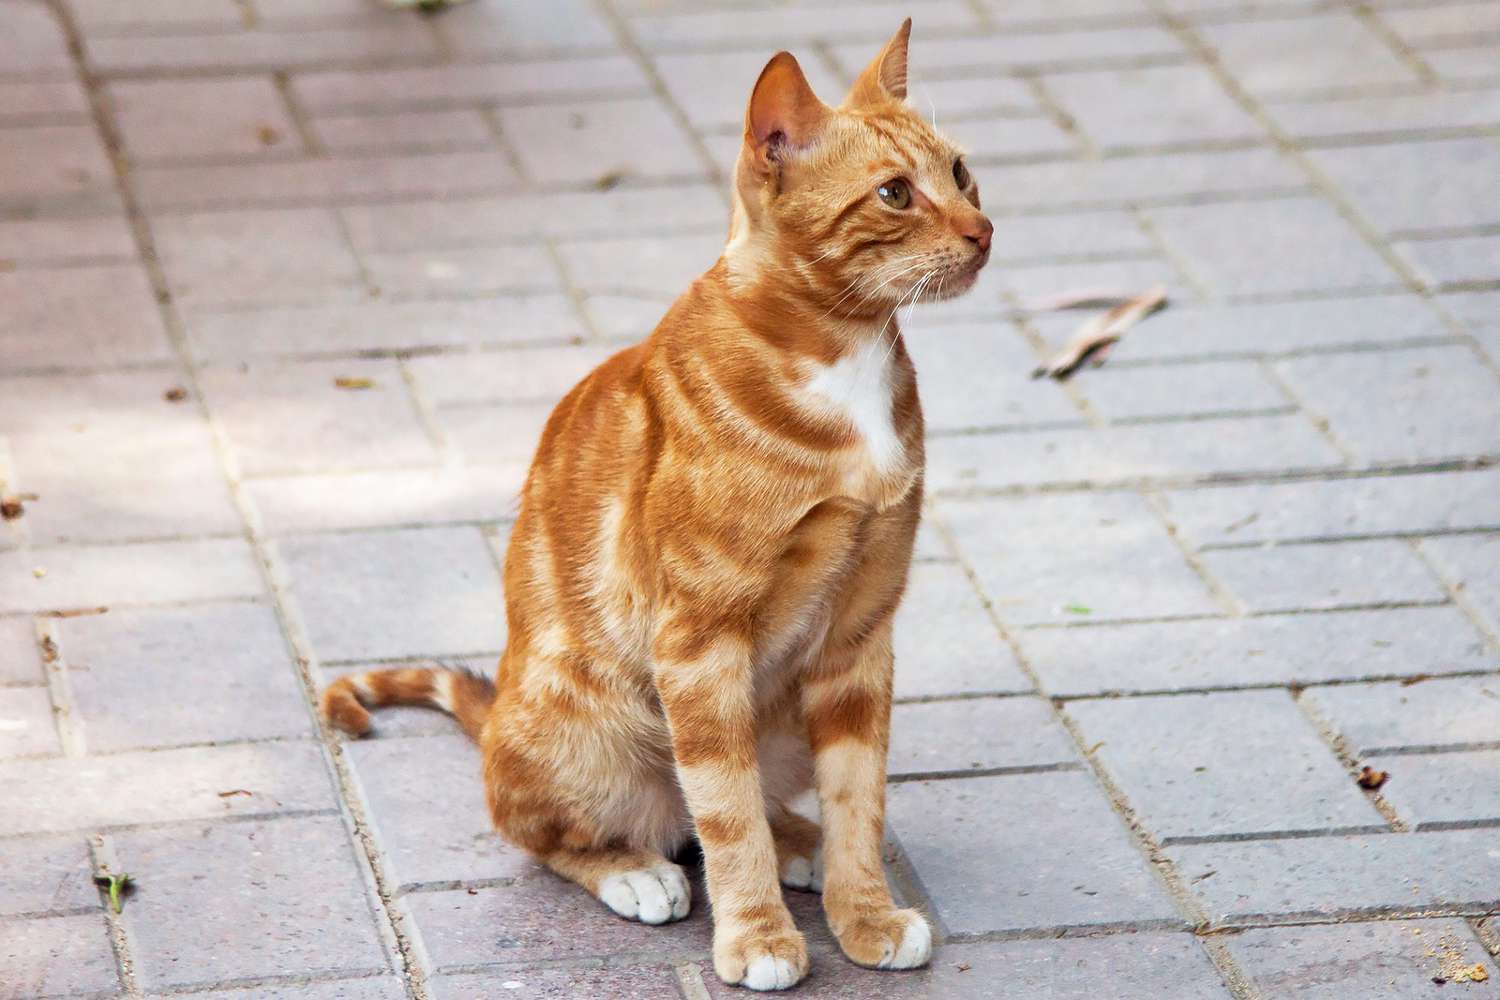 Nile Valley Egyptian Cat sitting on brick pavement